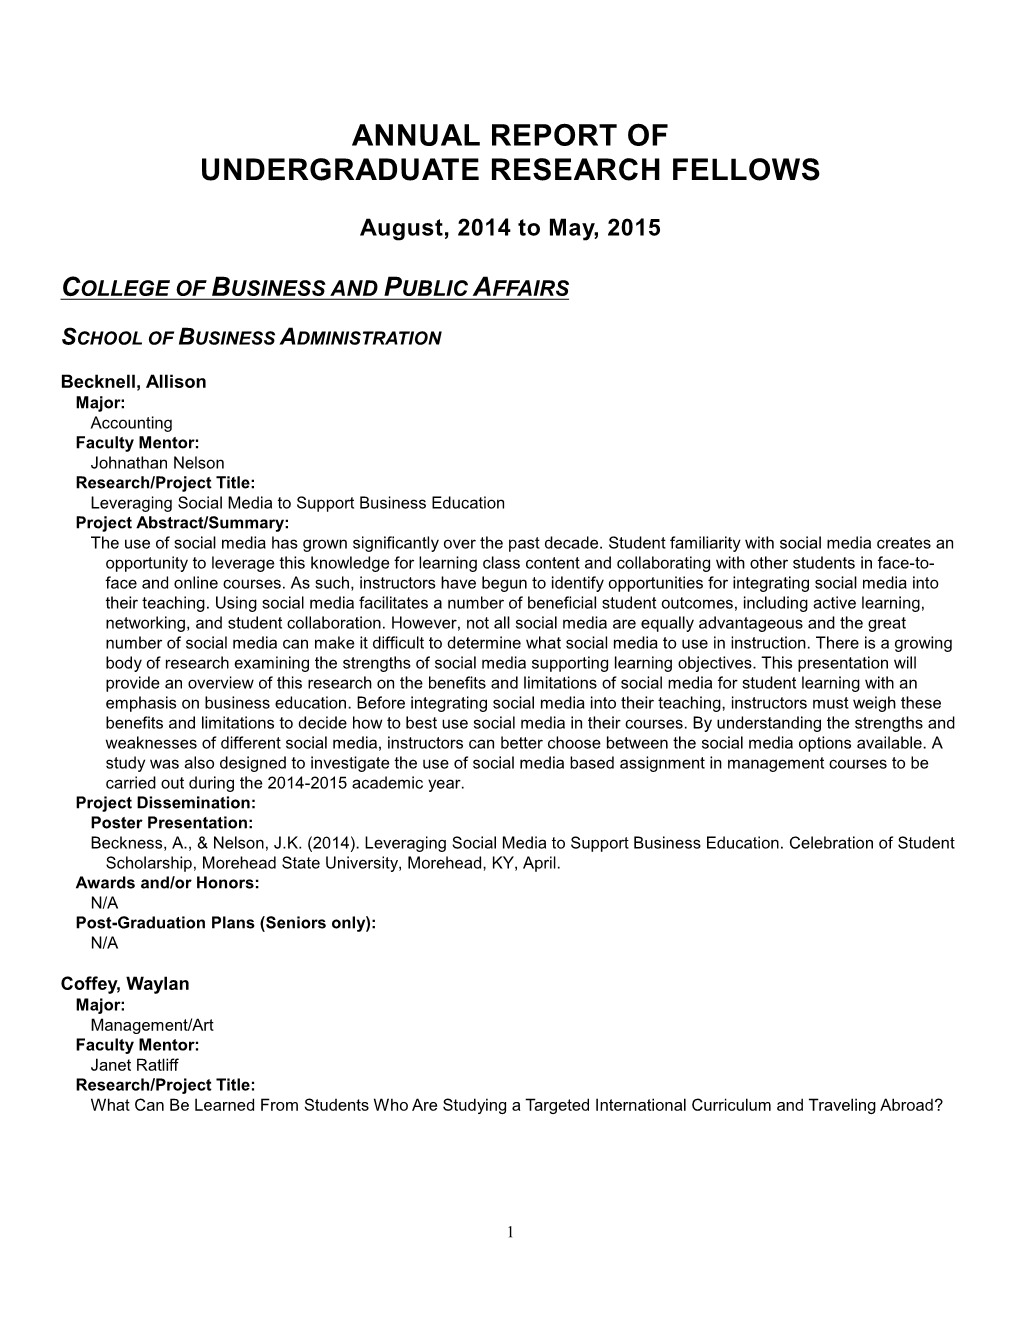 Annual Report of Undergraduate Research Fellows